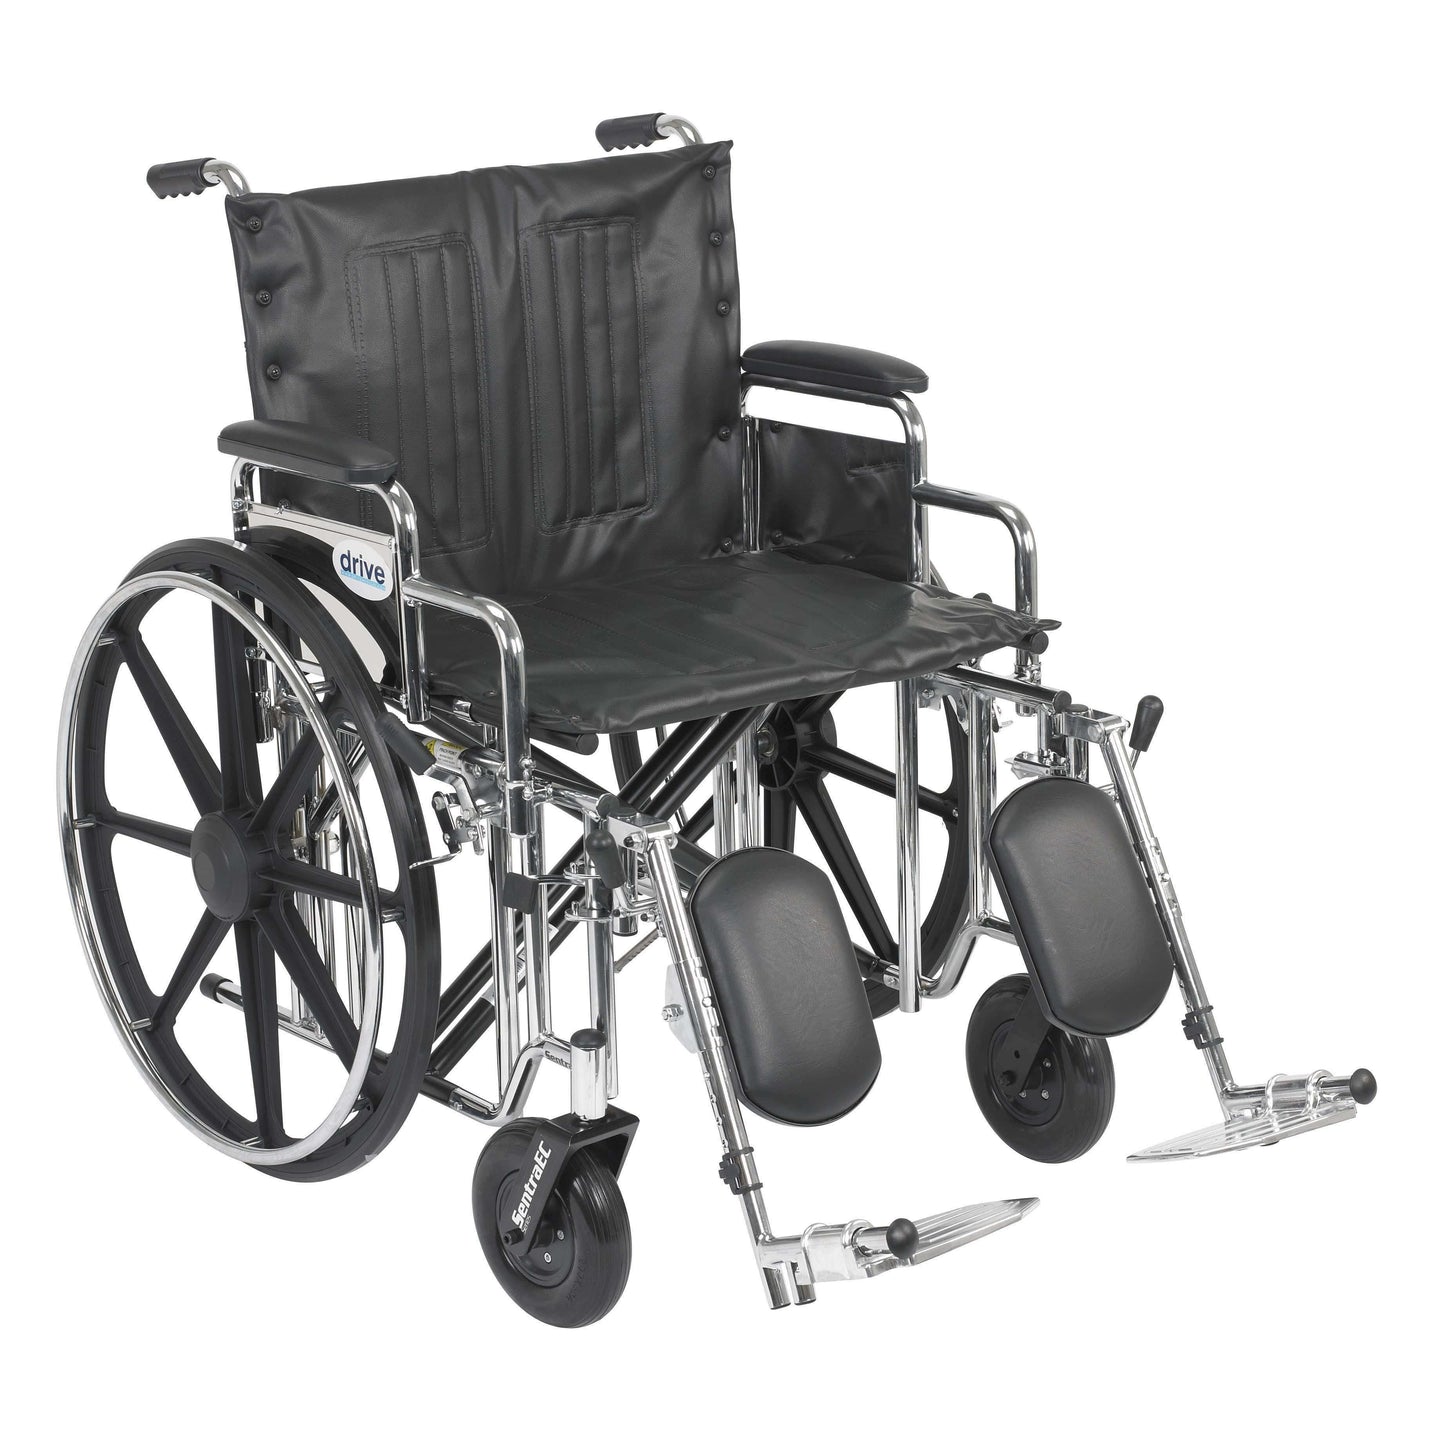 Drive std22dda-elr Sentra Extra Heavy Duty Wheelchair, Detachable Desk Arms, Elevating Leg Rests, 22" Seat